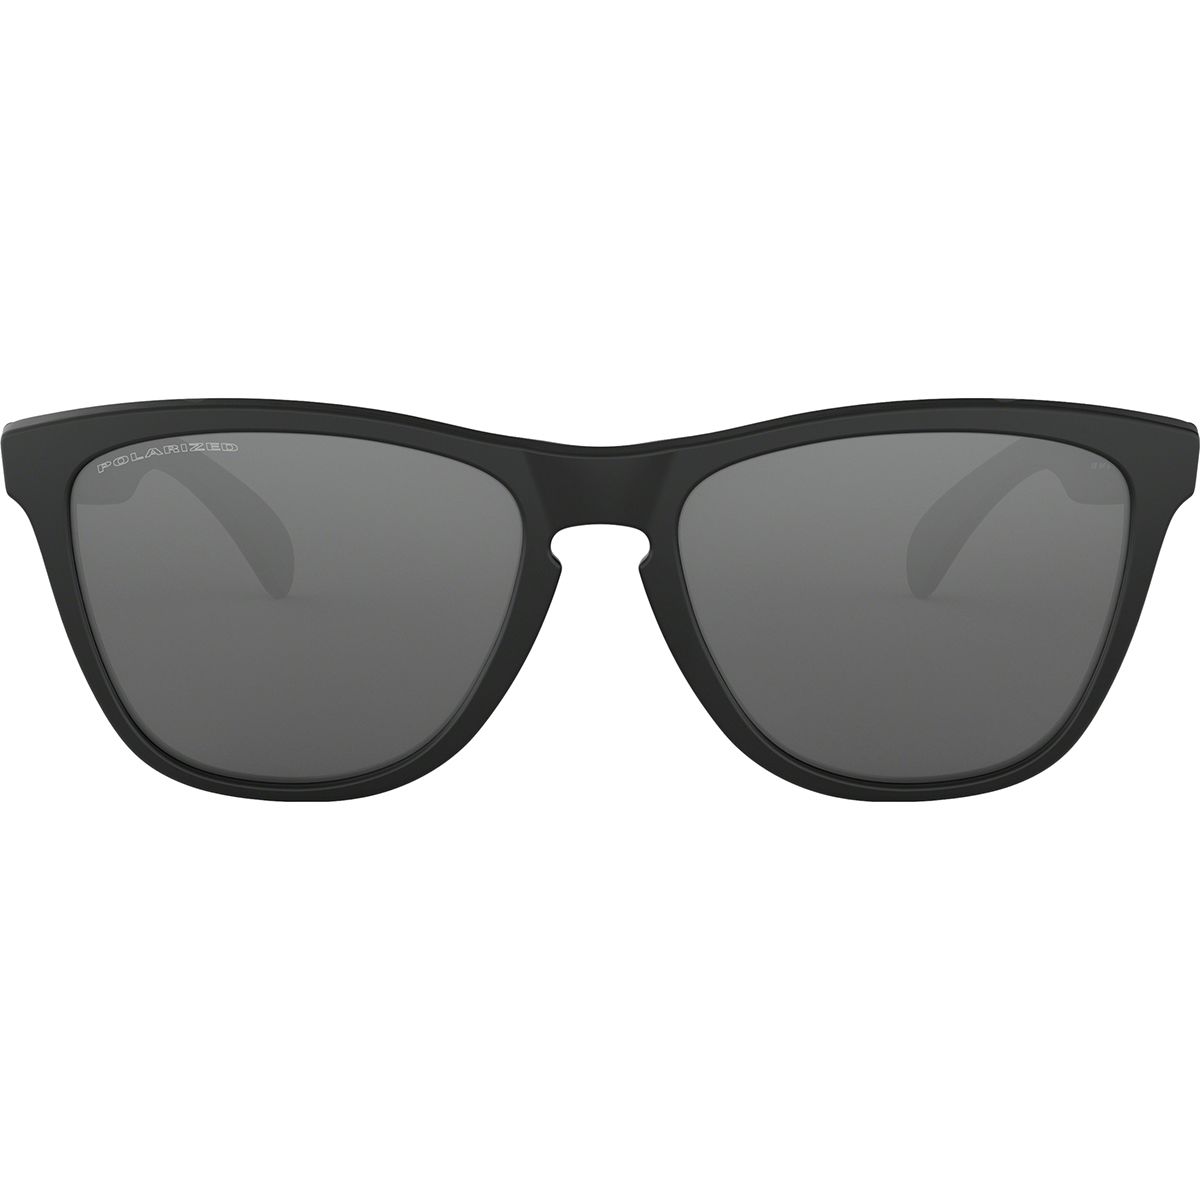 Oakley Frogskins Polarized Sunglasses - Men's - Accessories